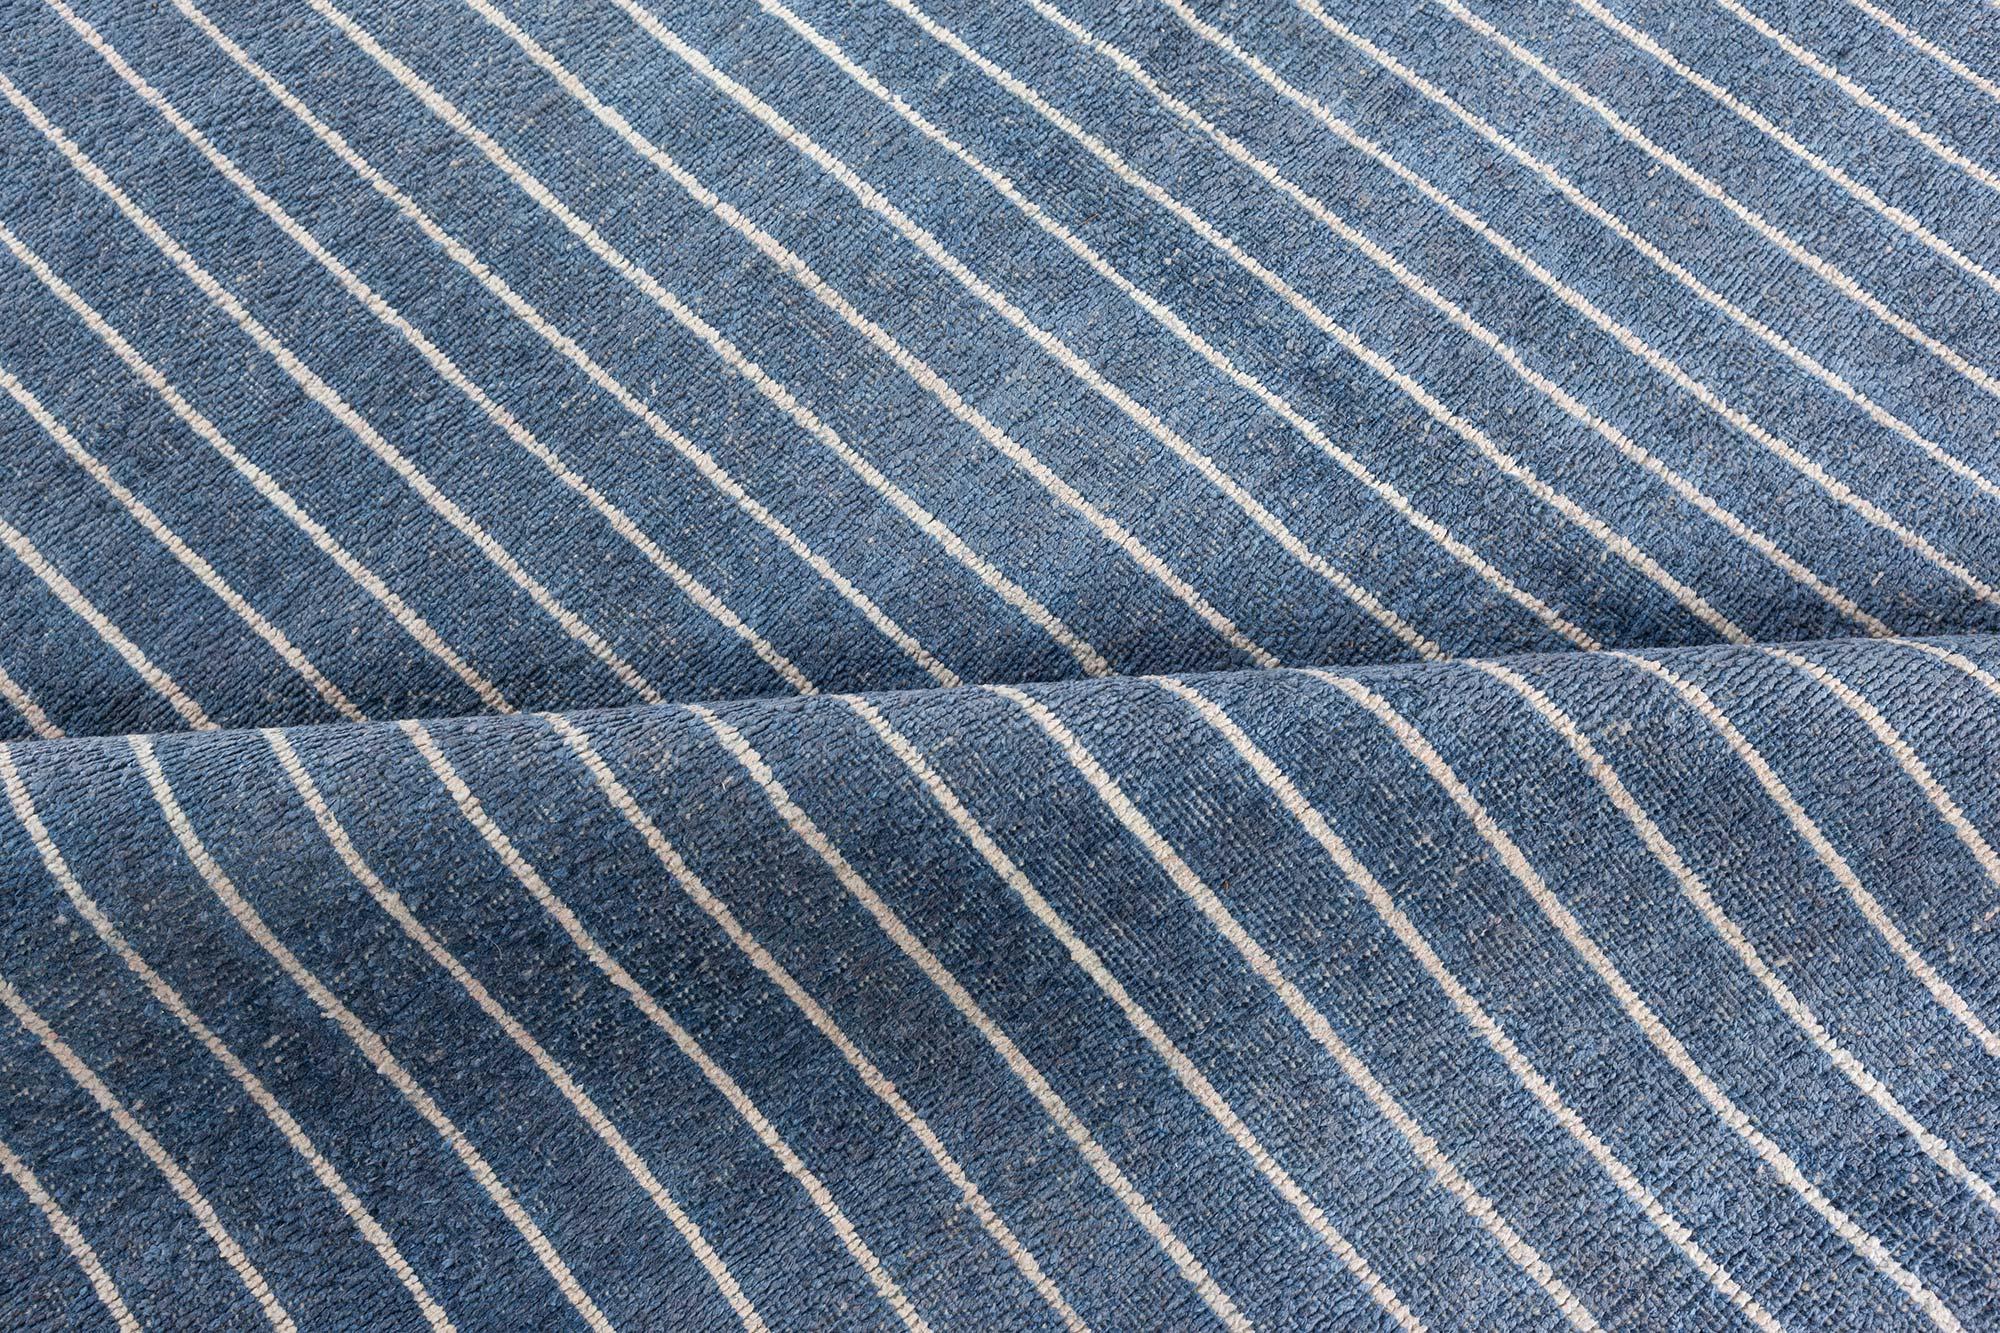 Contemporary striped blue and white handmade rug by Doris Leslie Blau
Size: 9'0